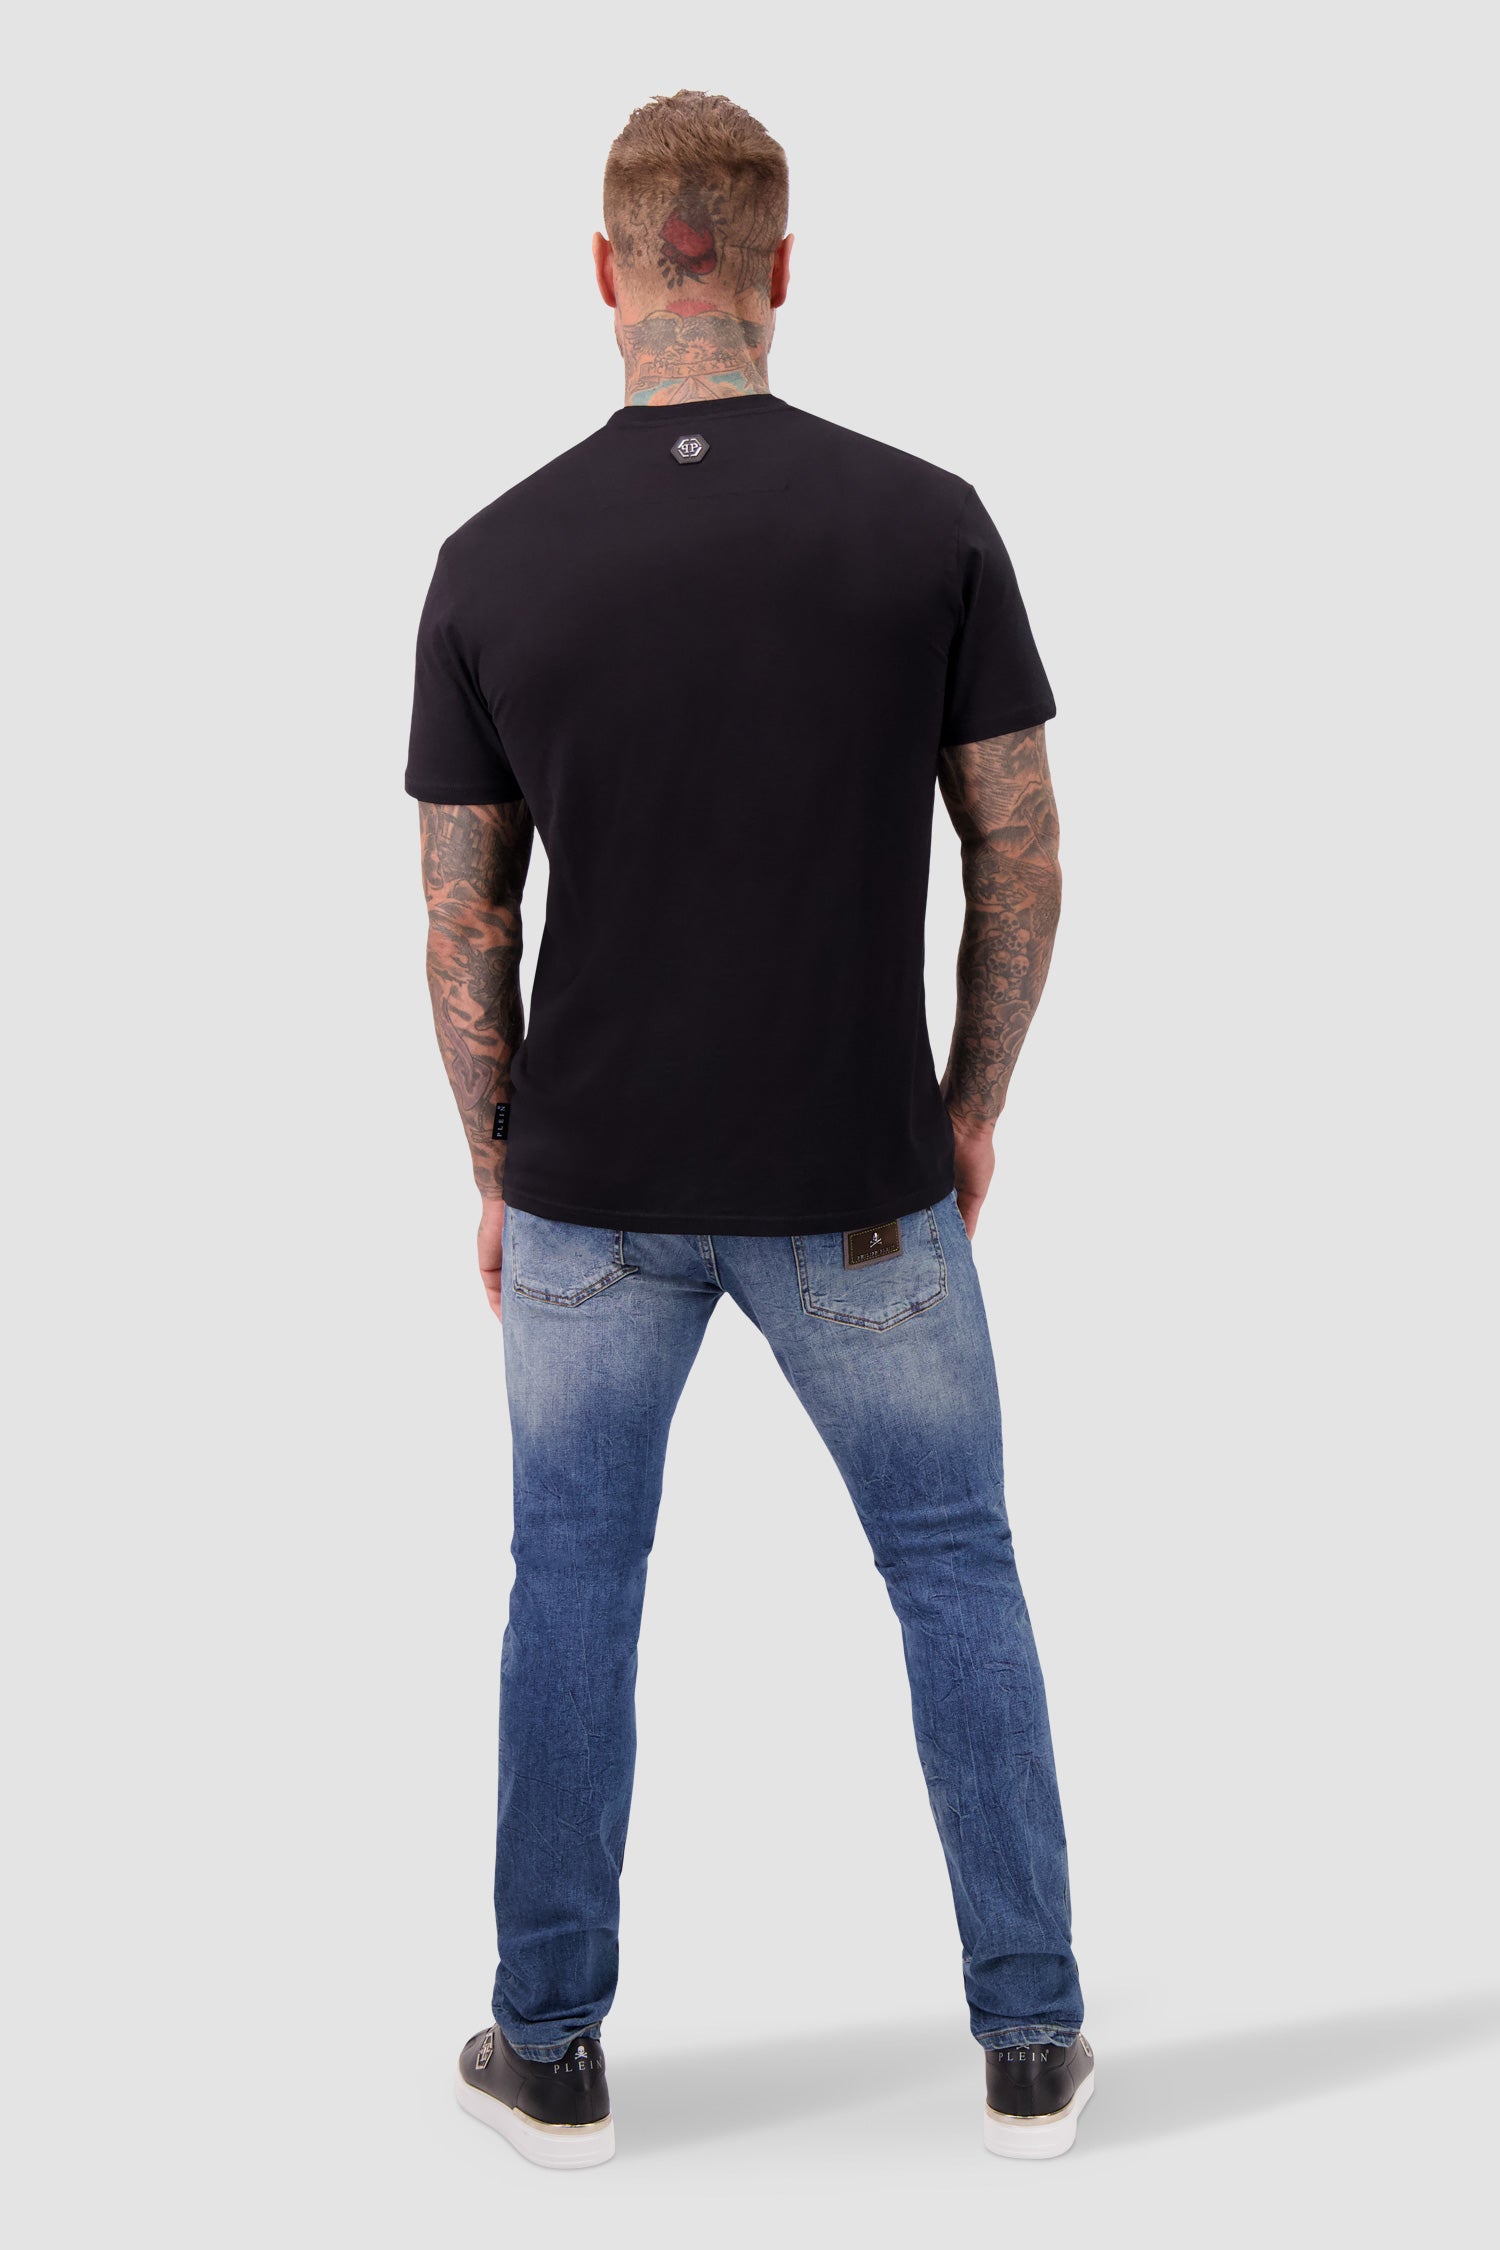 Philipp Plein Black Round Neck SS PP Glass T-Shirt